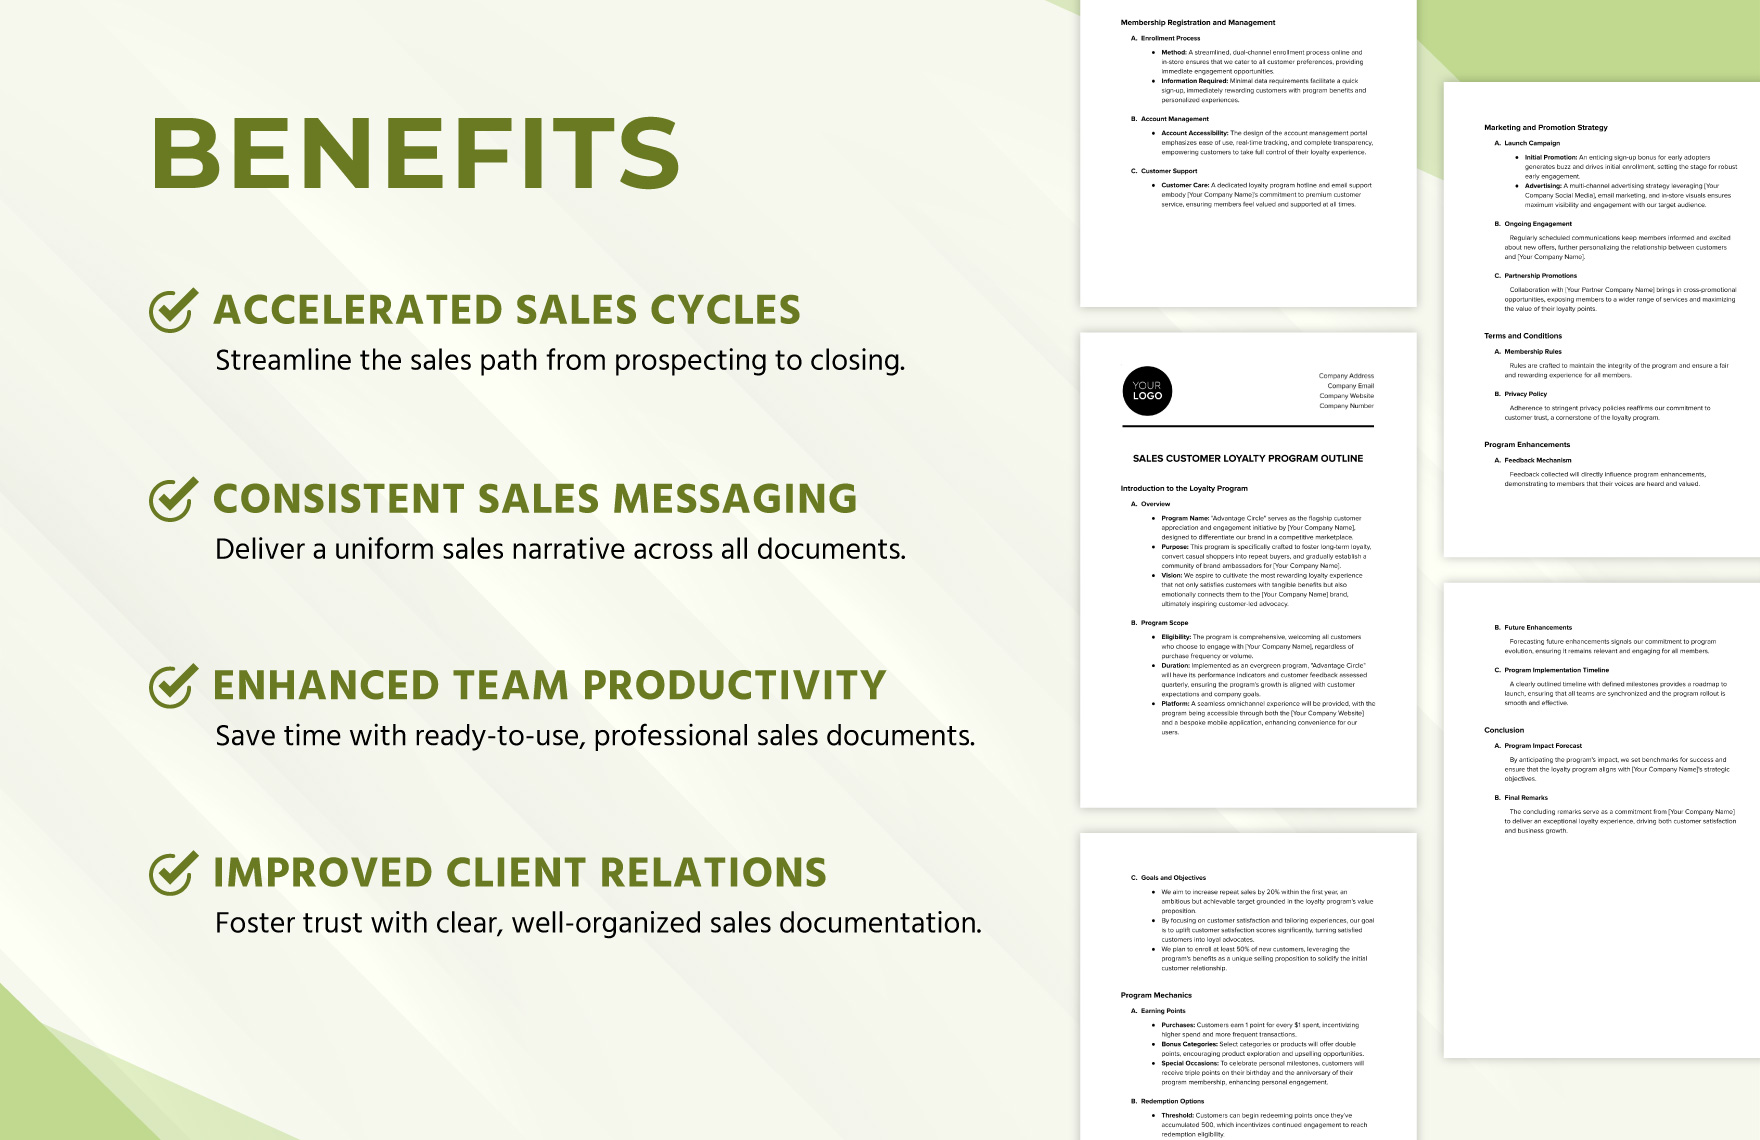 Sales Customer Loyalty Program Outline Template